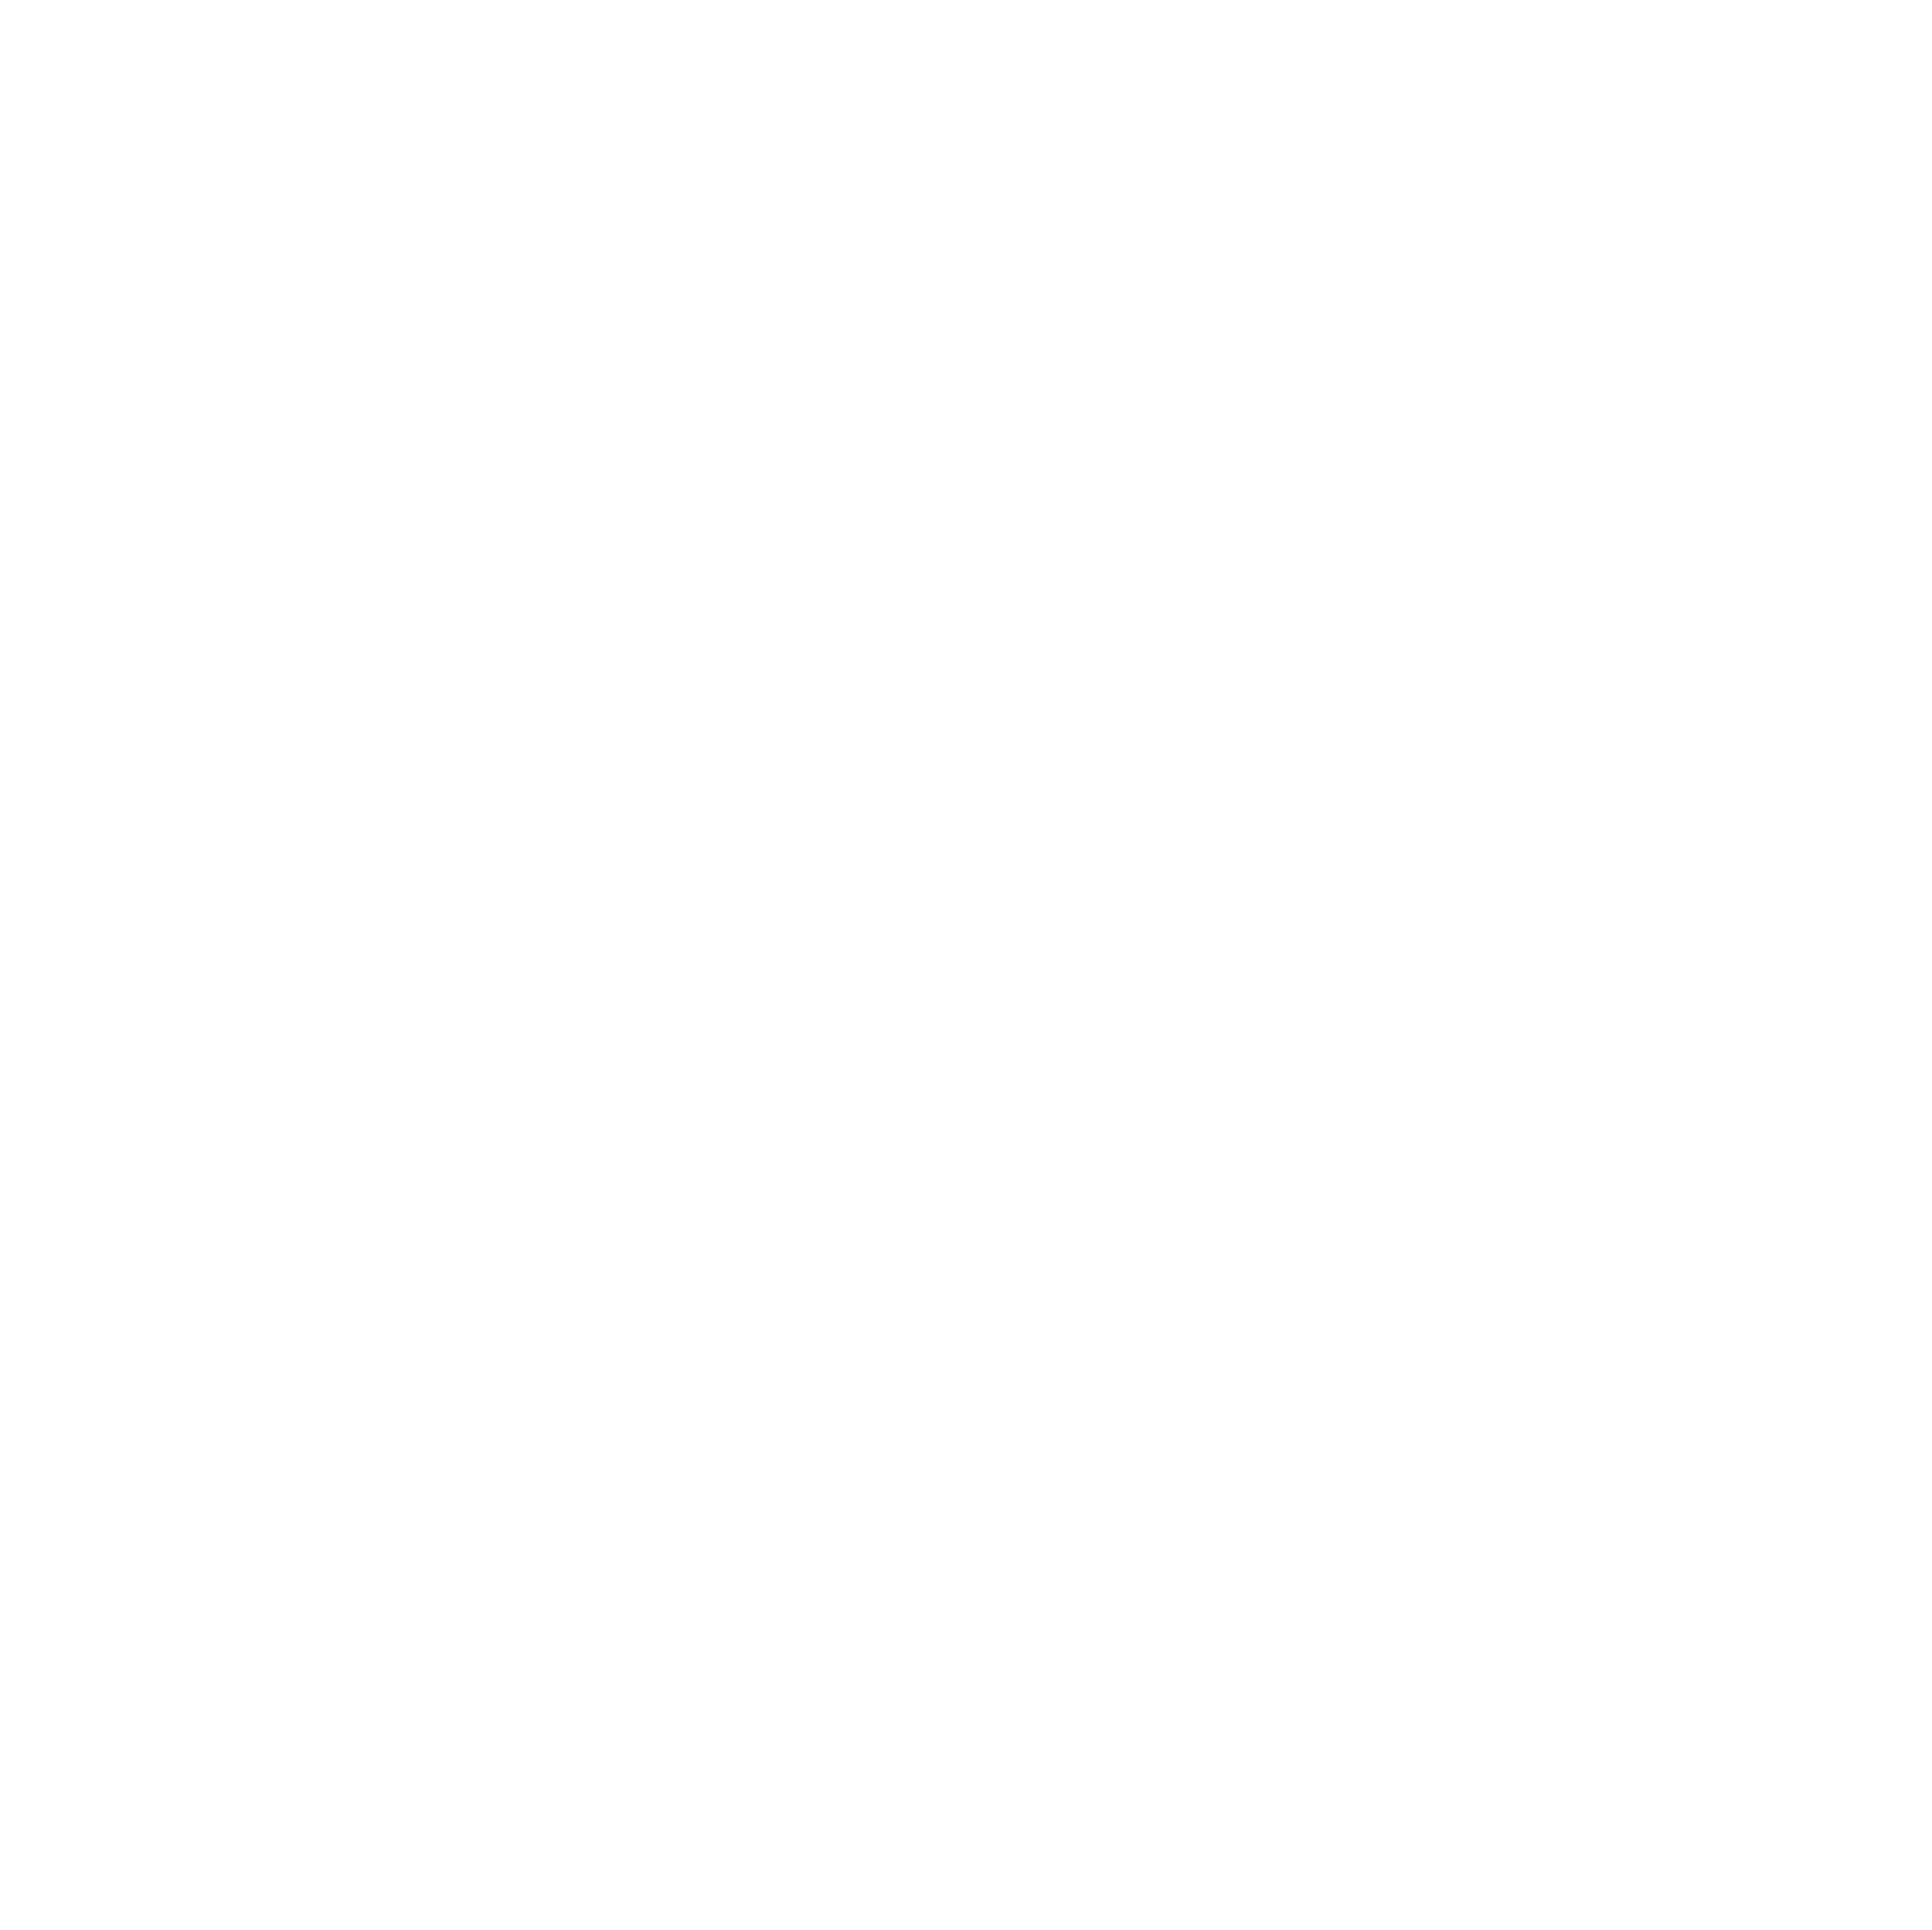 Leen Everaerts – Hands on marketing